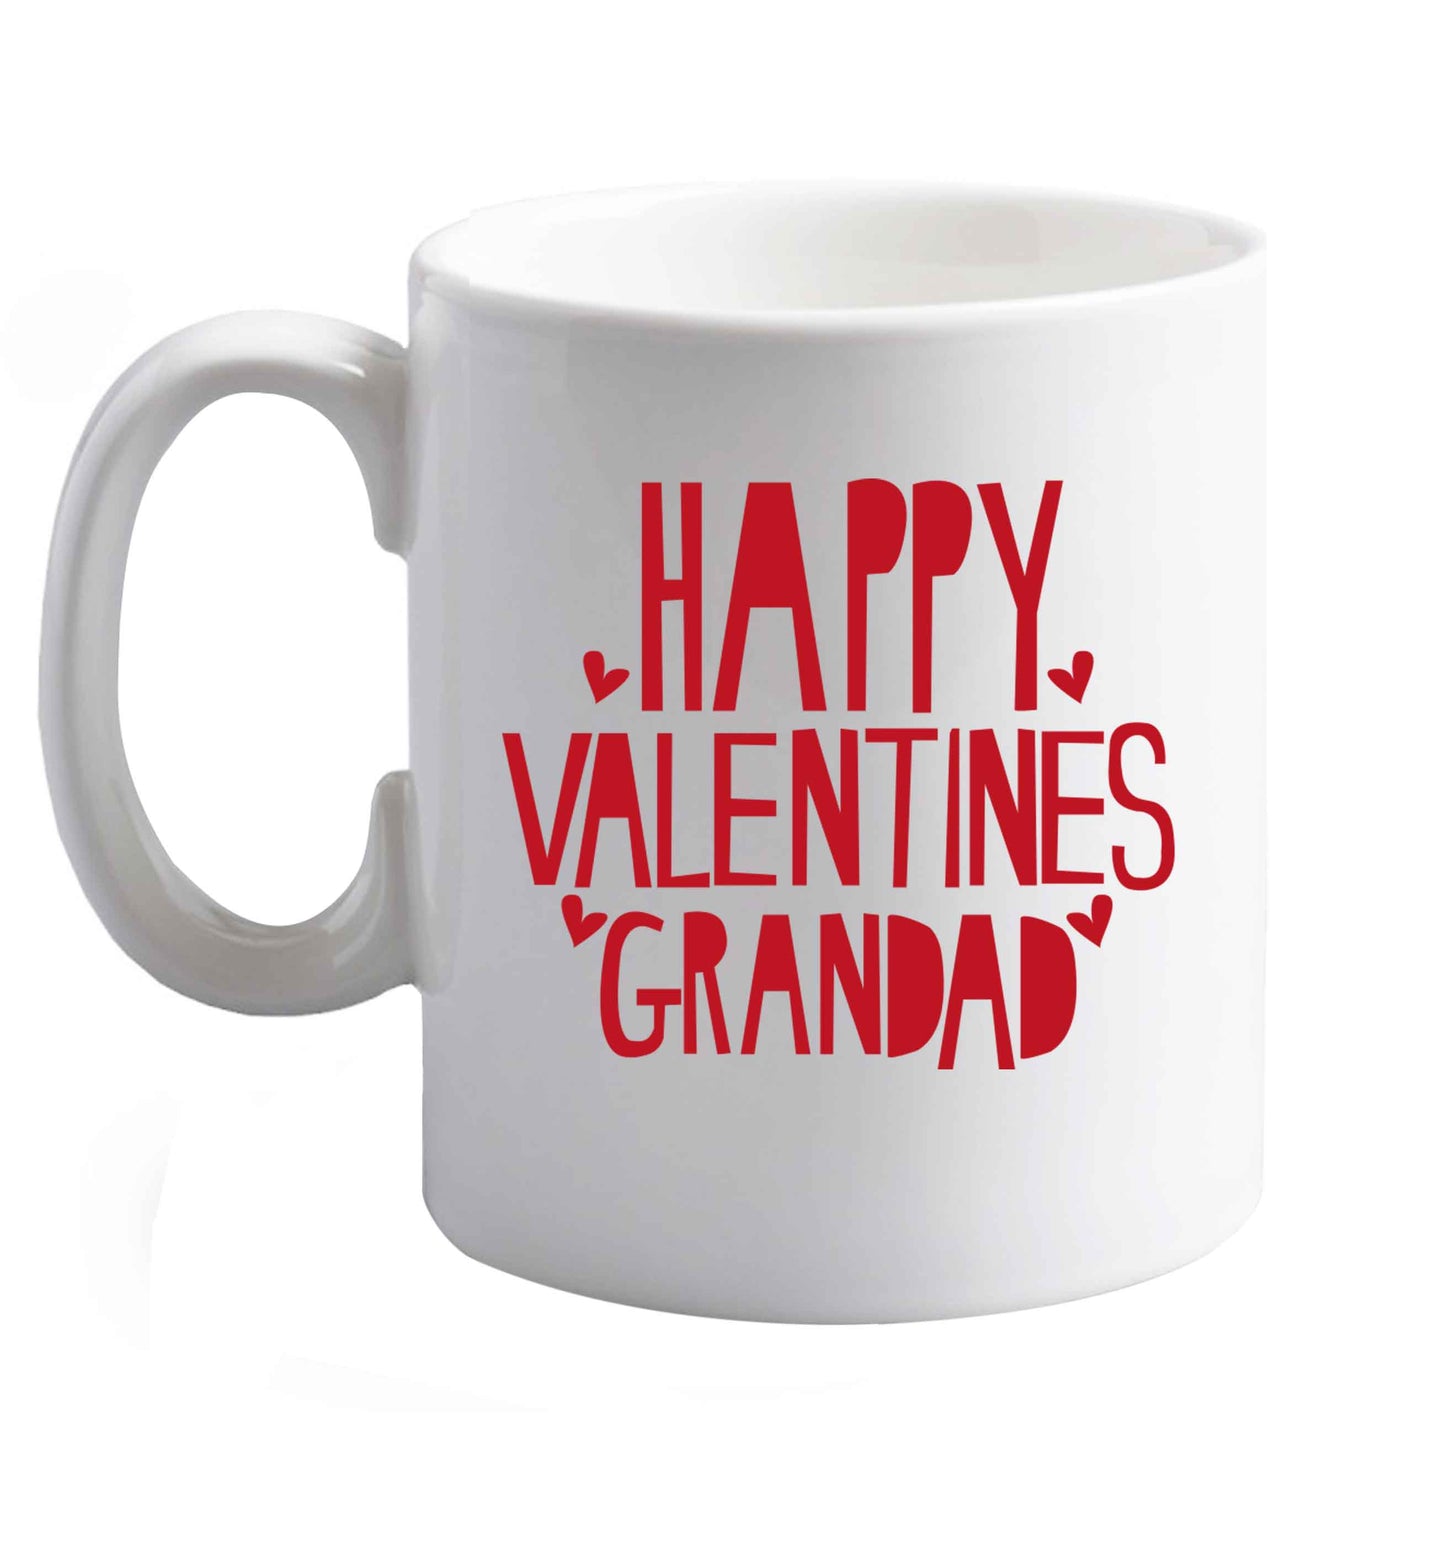 10 oz Happy valentines grandad ceramic mug right handed